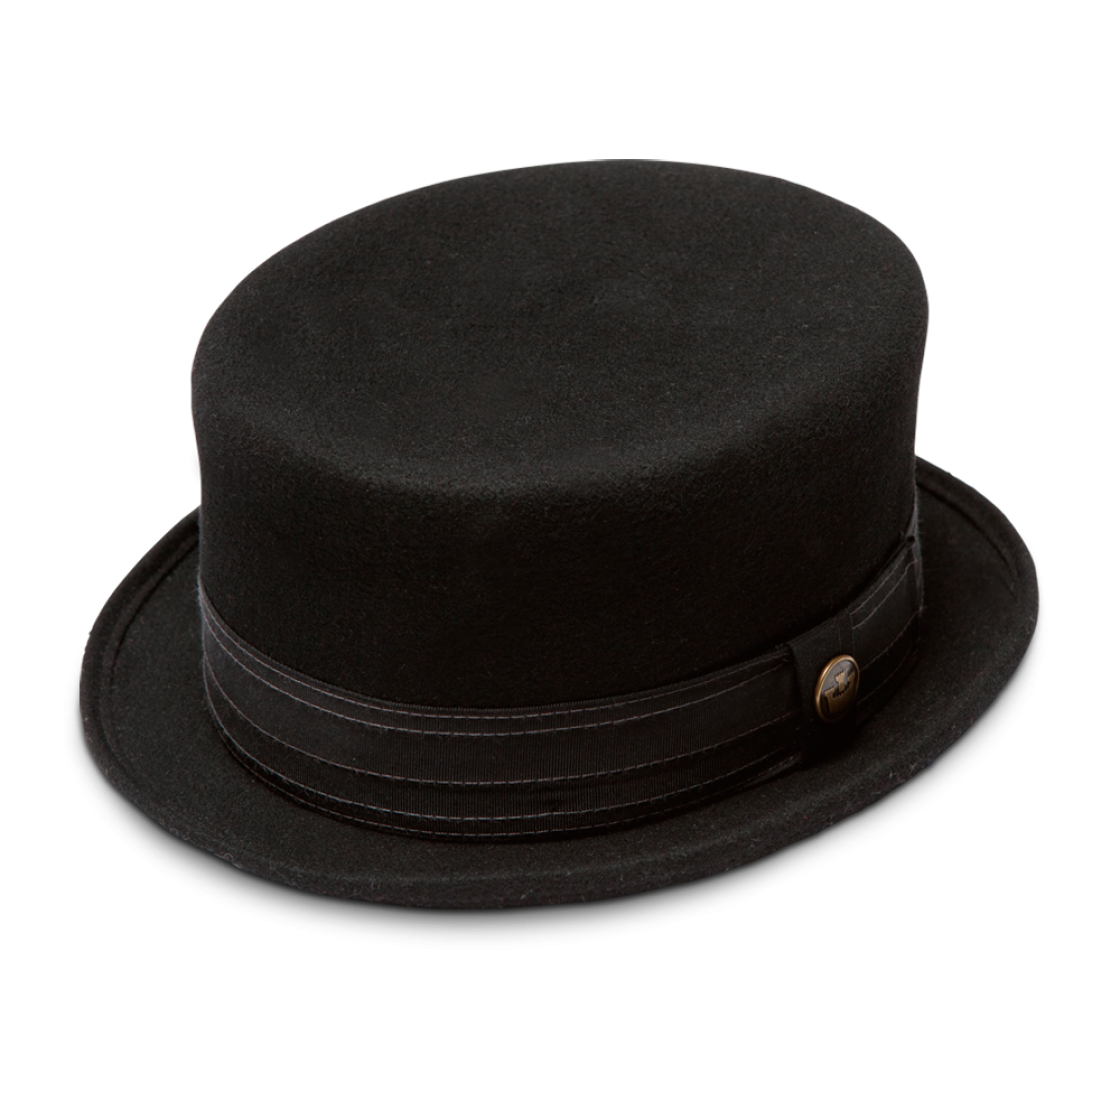 Download PNG image - Magic Black Hat PNG Transparent Image 